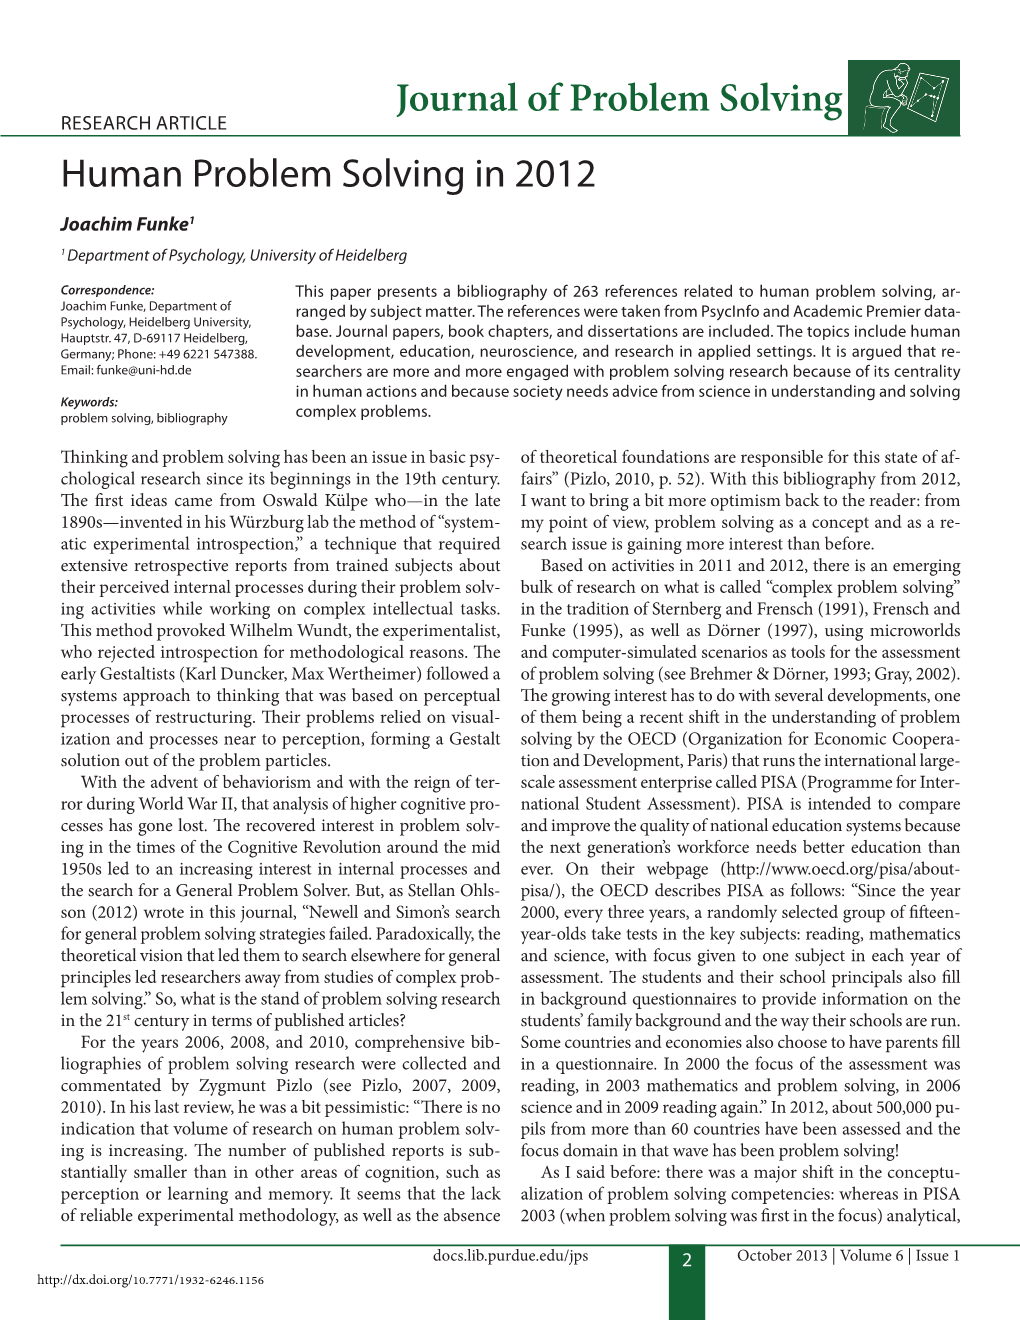 Human Problem Solving in 2012 Joachim Funke1 1 Department of Psychology, University of Heidelberg